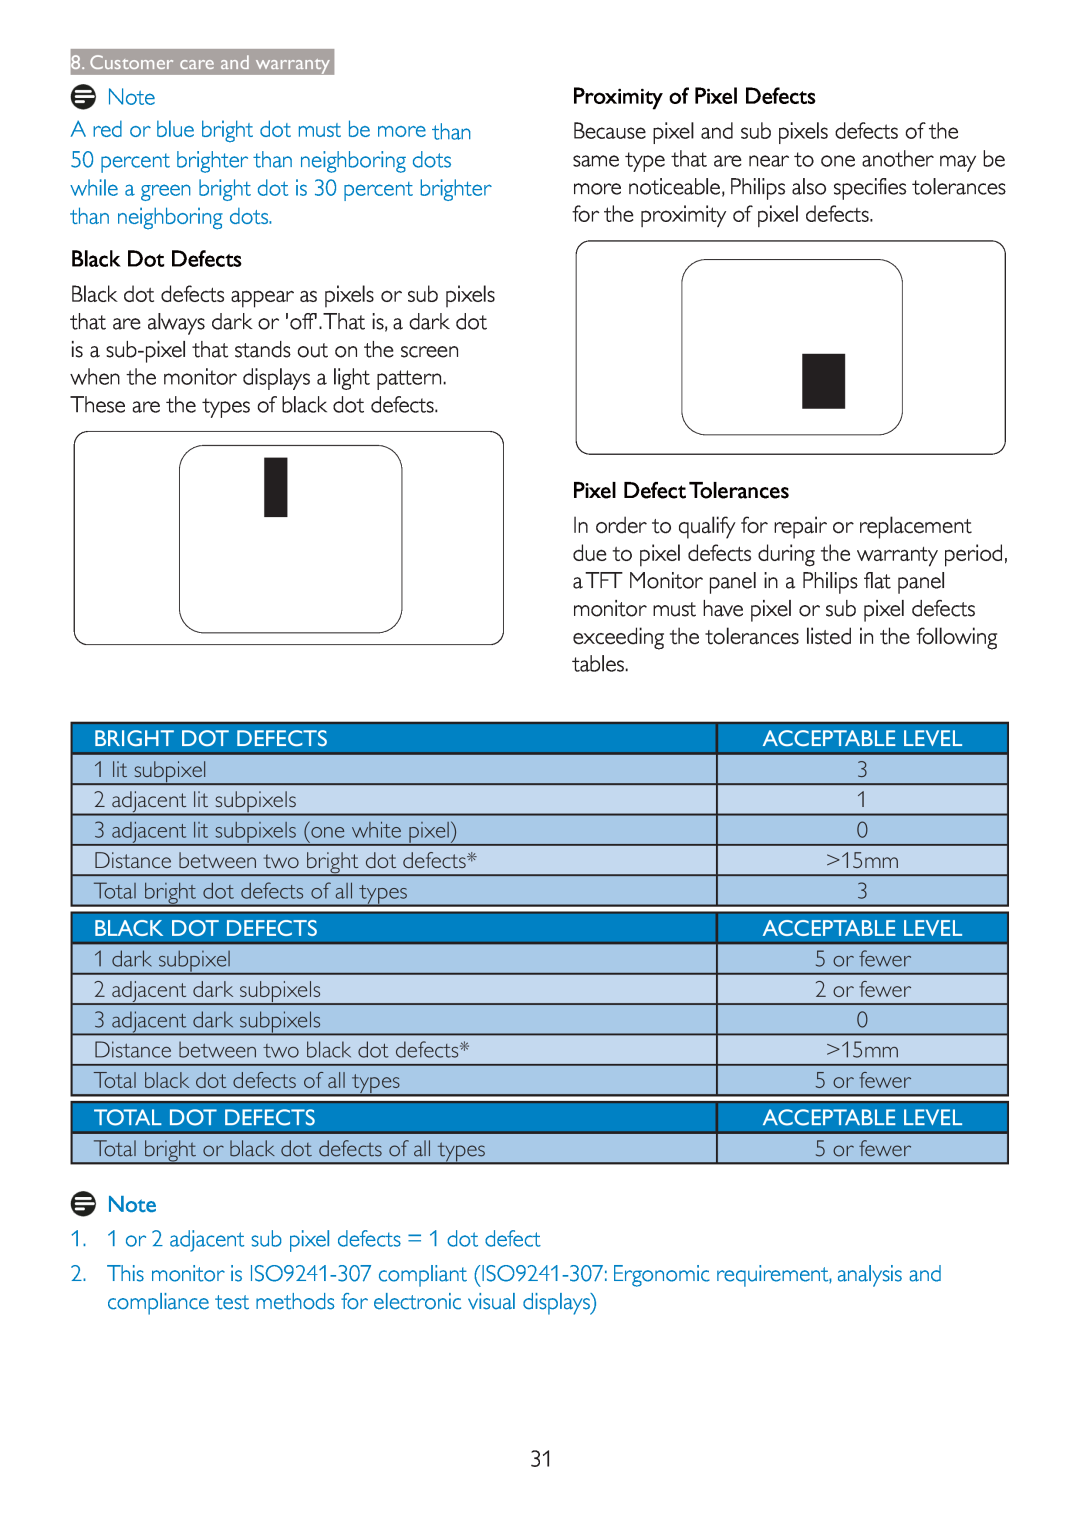 Philips 2.47E+06 user manual Black Dot Defects, Proximity of Pixel Defects, Pixel Defect Tolerances, Bright Dot Defects 